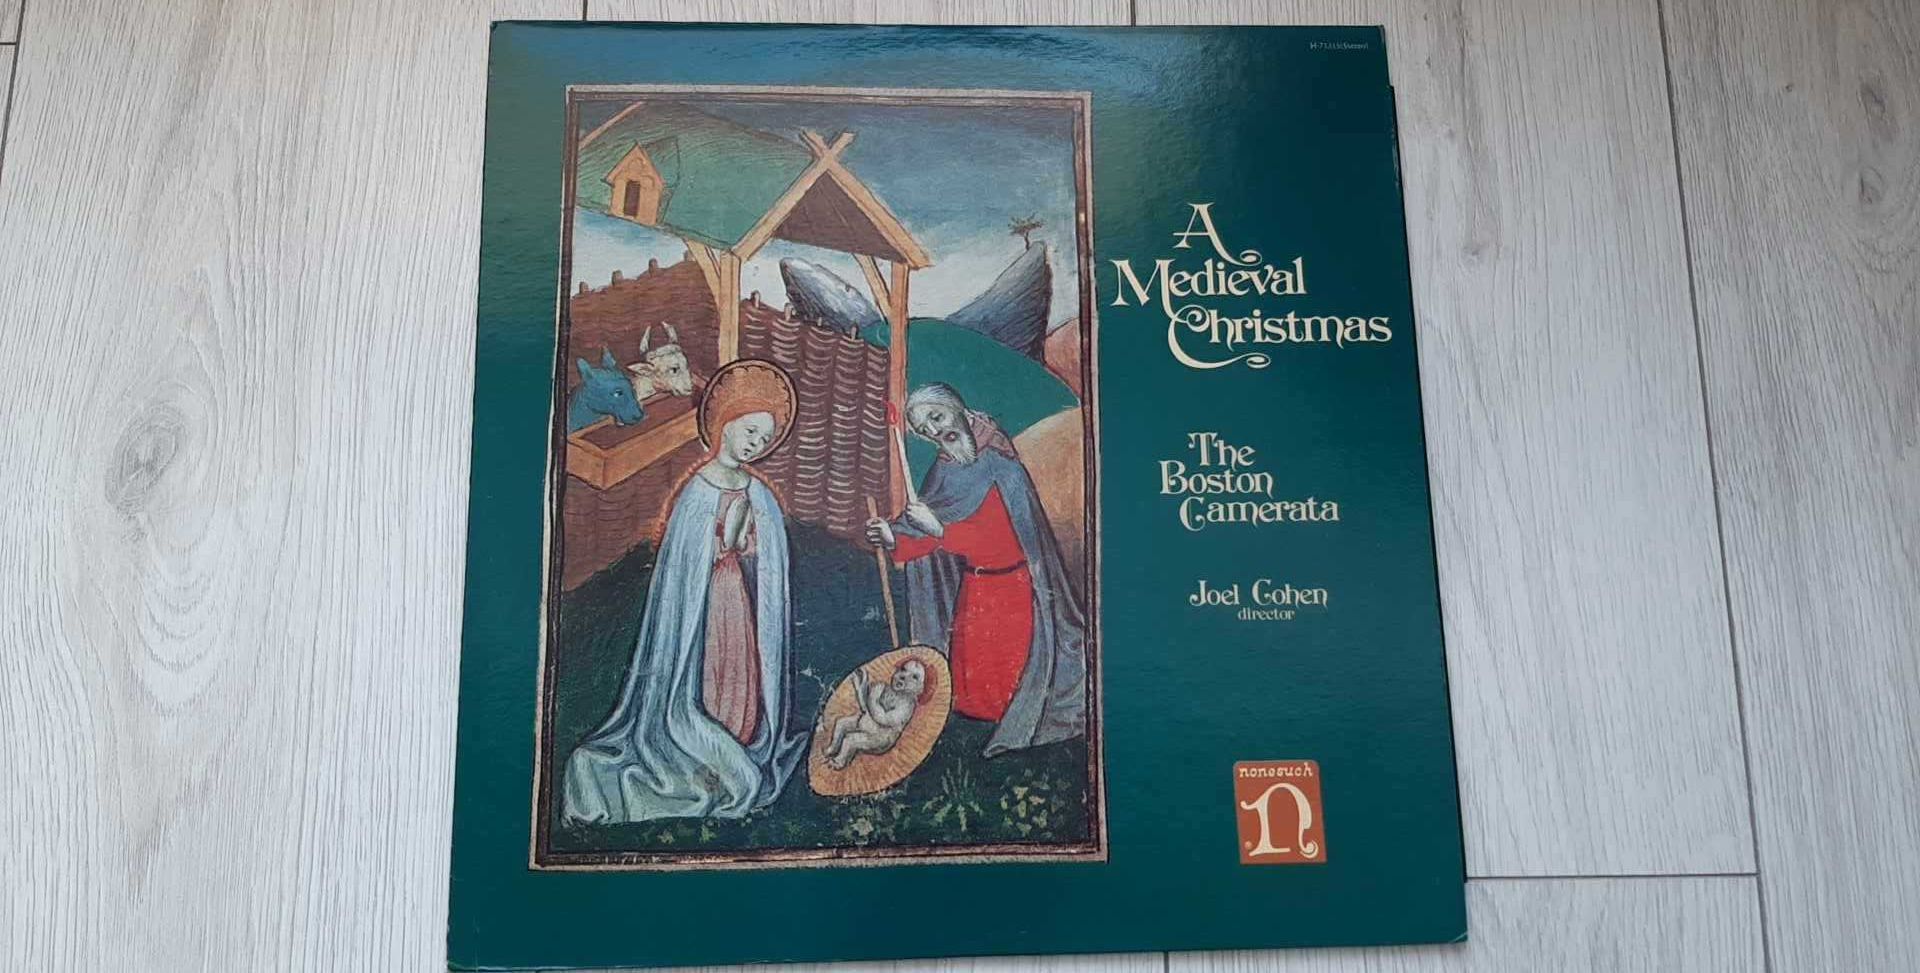 A Medieval Christmas "The Boston Camerata" (kolędy)- płyta winylowa